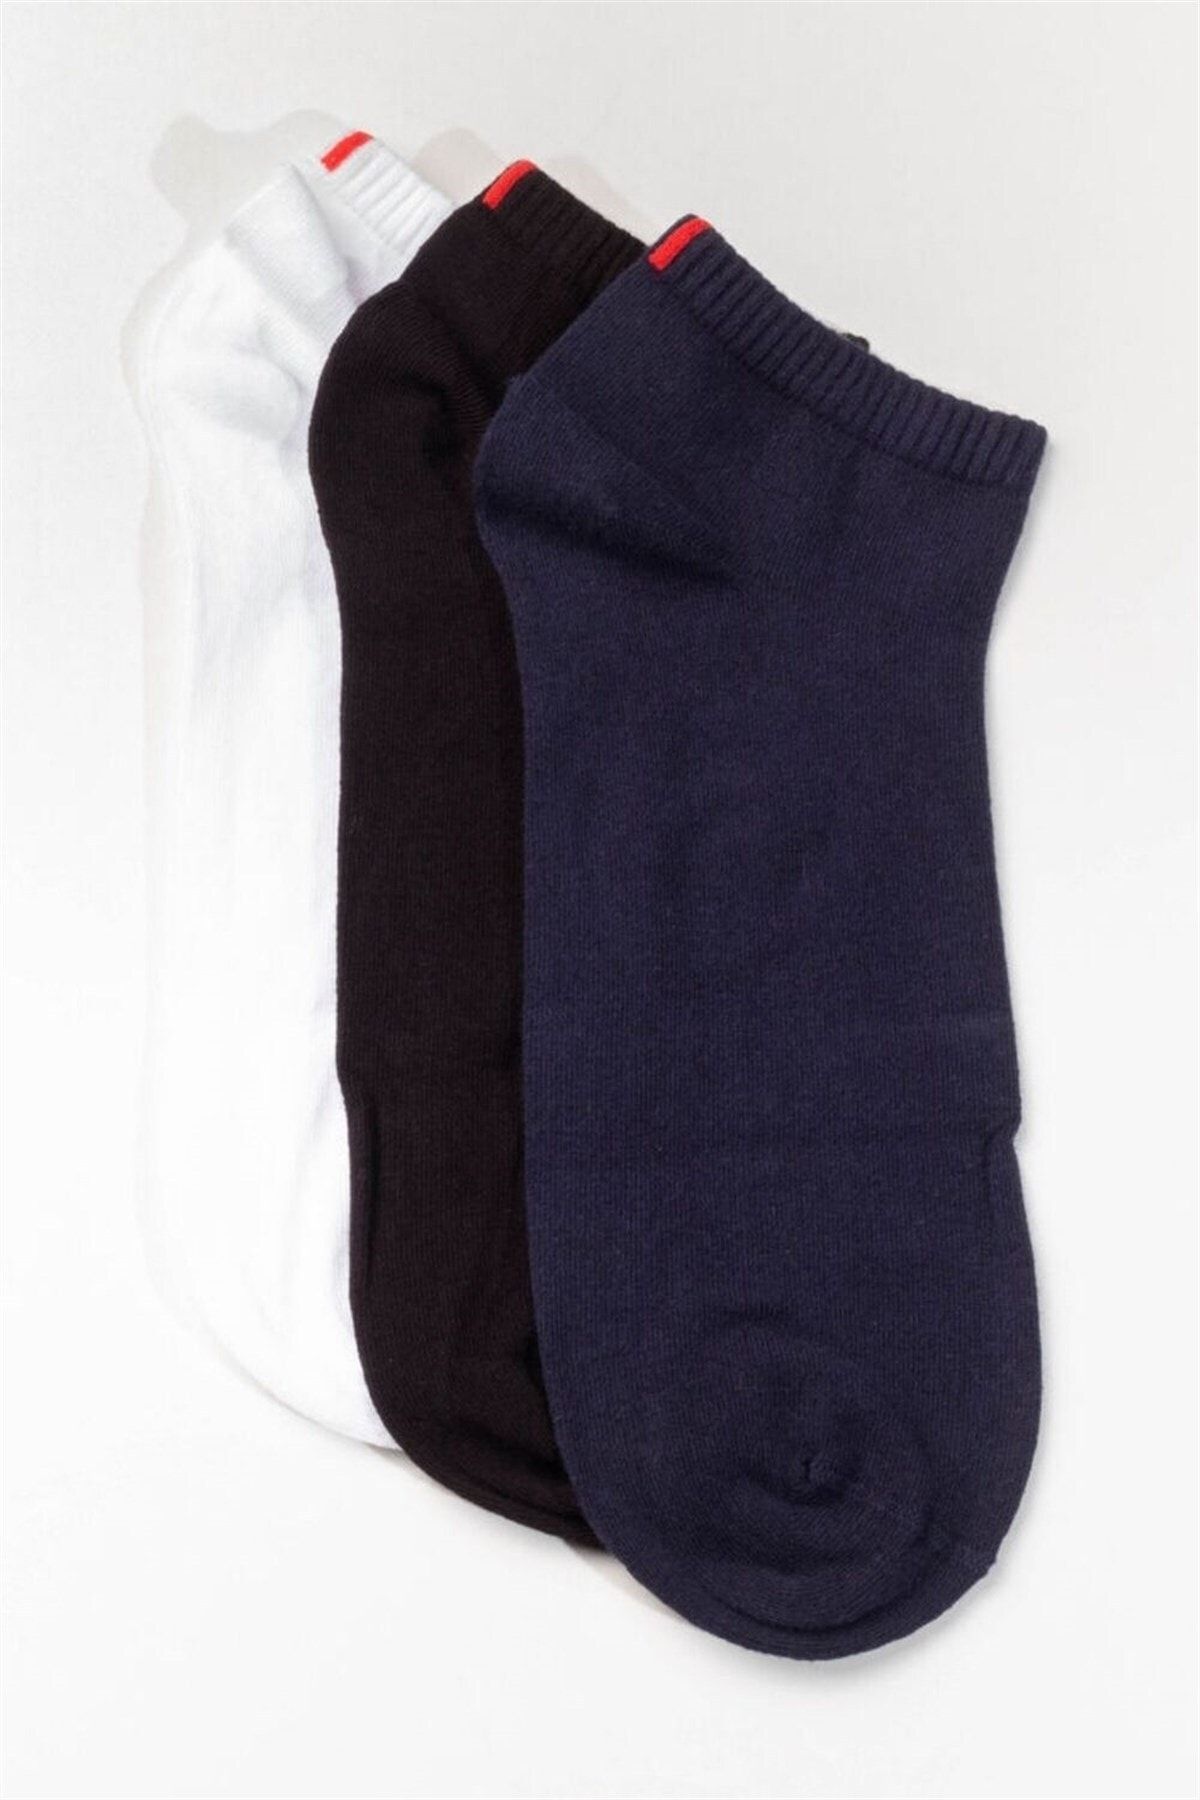 Katia & Bony 3 Lü Erkek Basic Patik Çorap Siyah/beyaz/lacivert